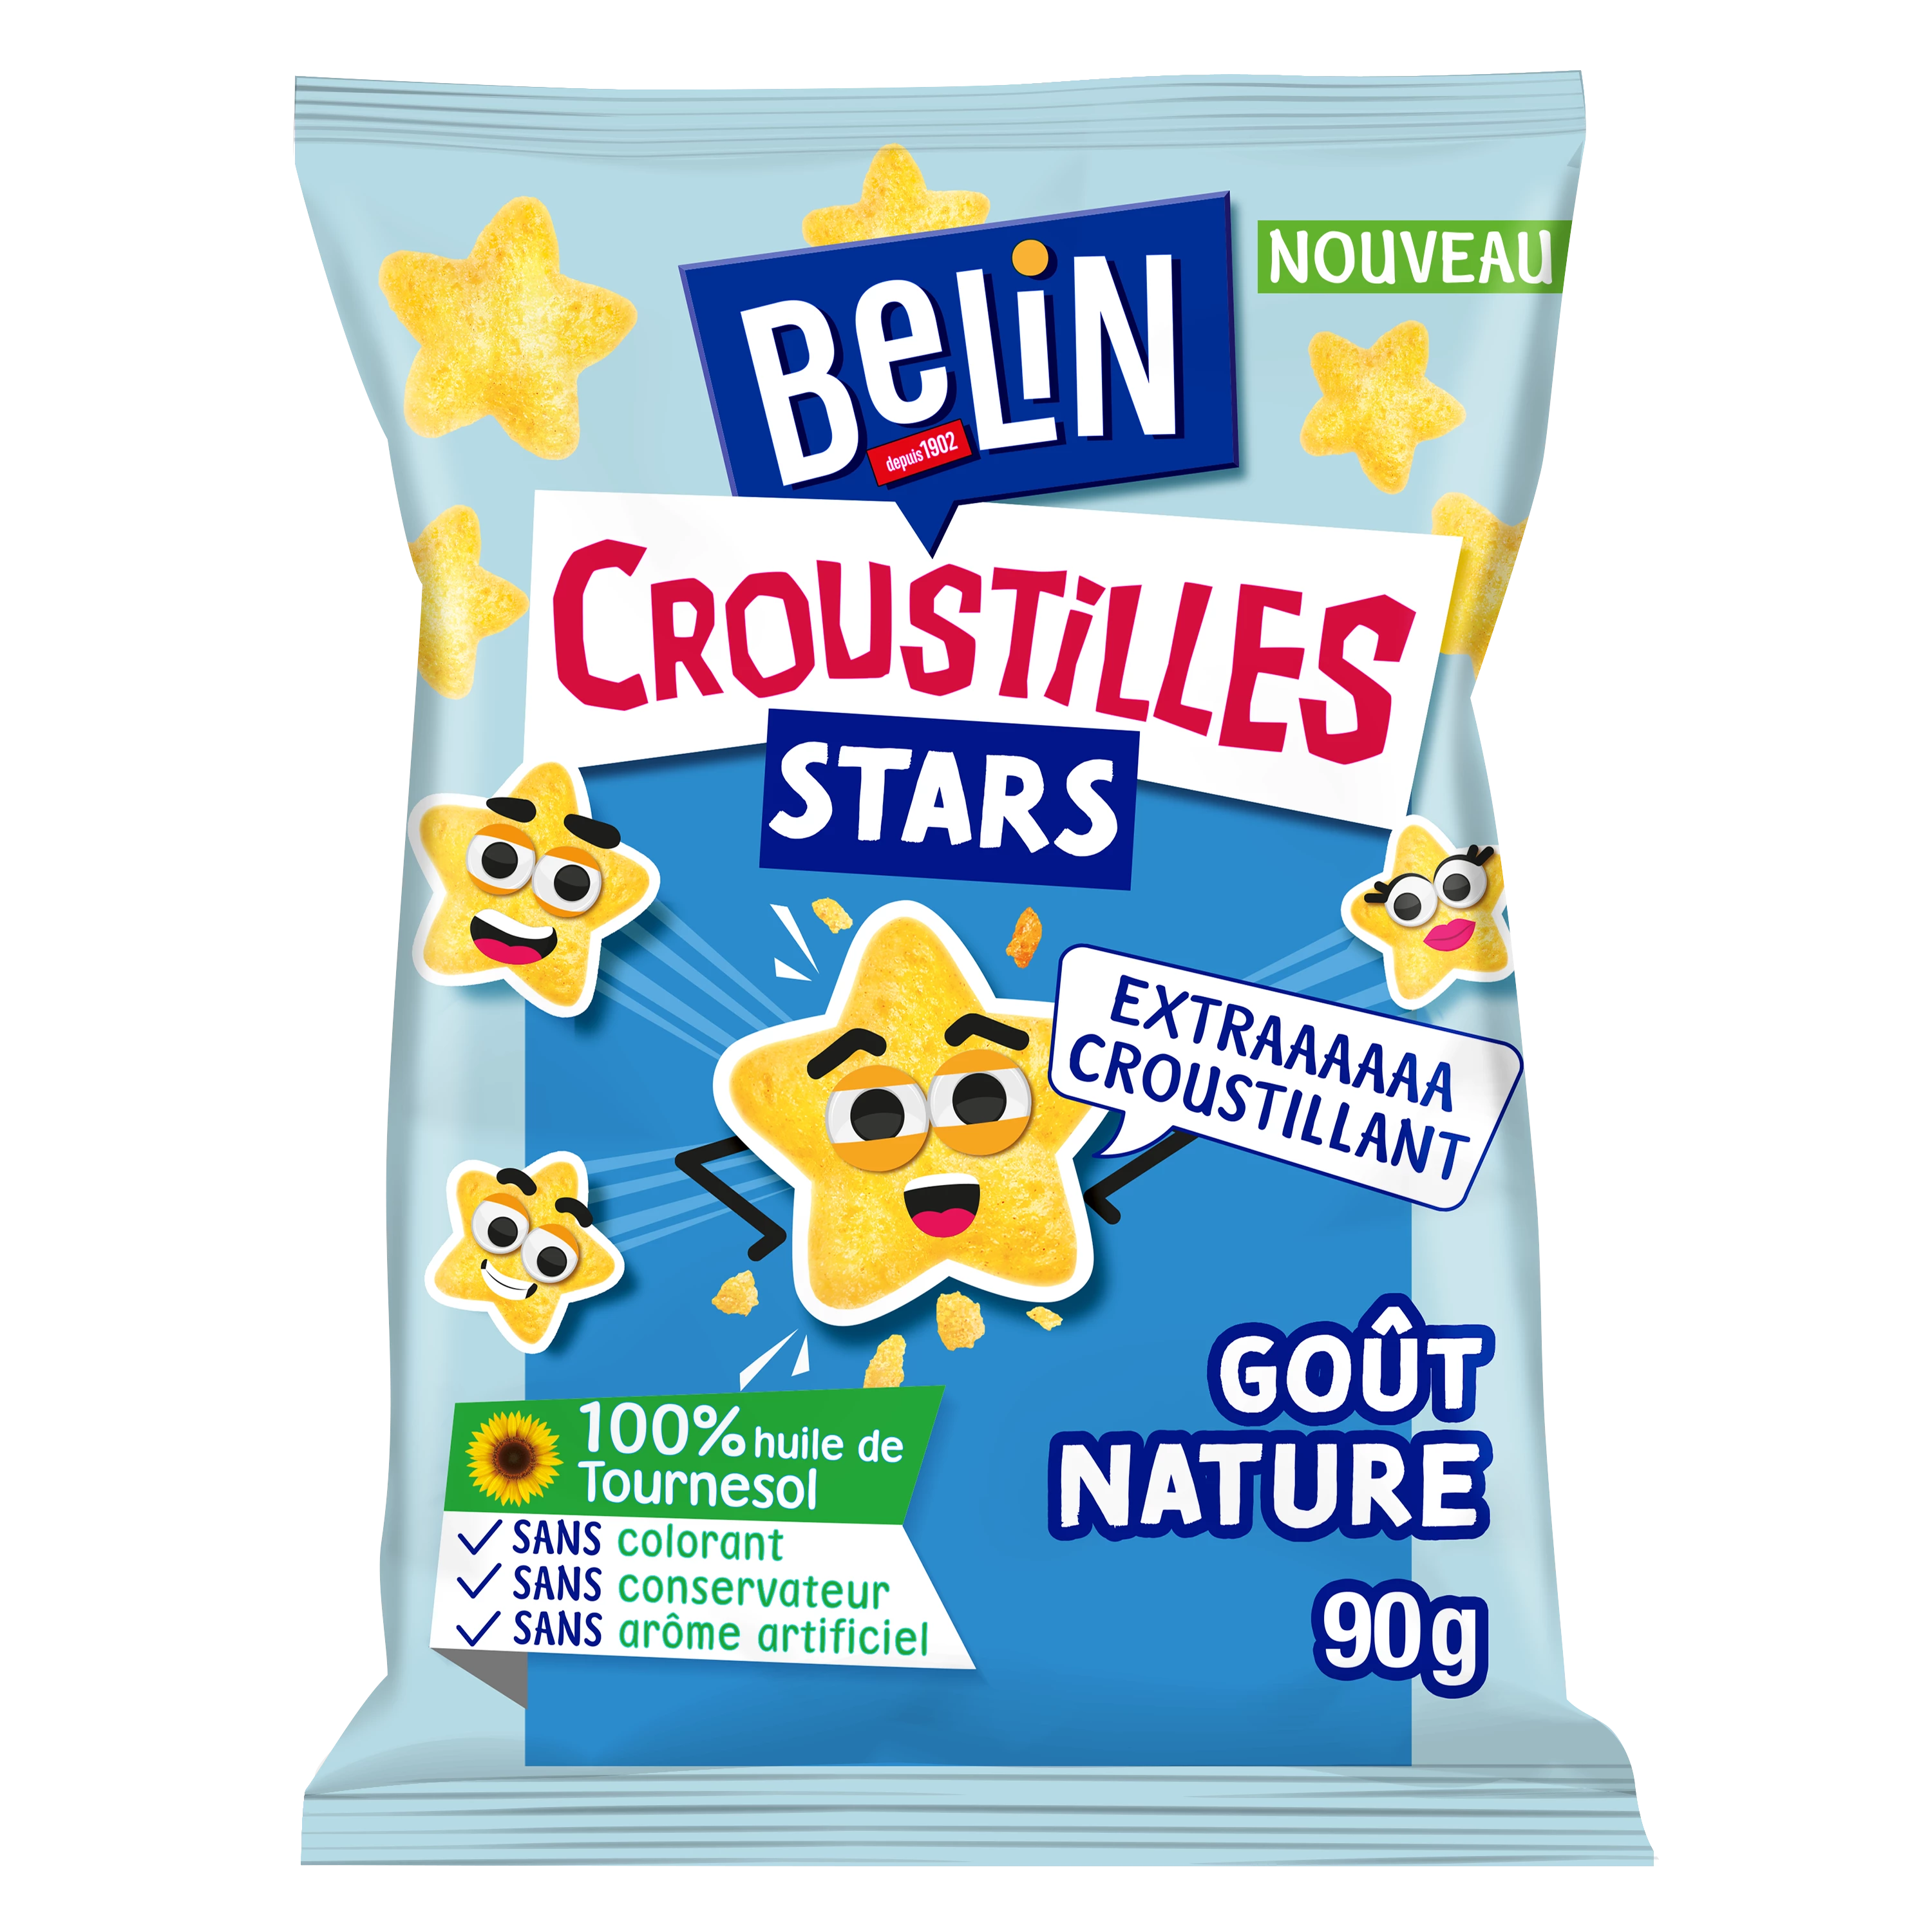 Aperitifkekse mit natürlichem Geschmack Croustil les Stars, 90g - BELIN